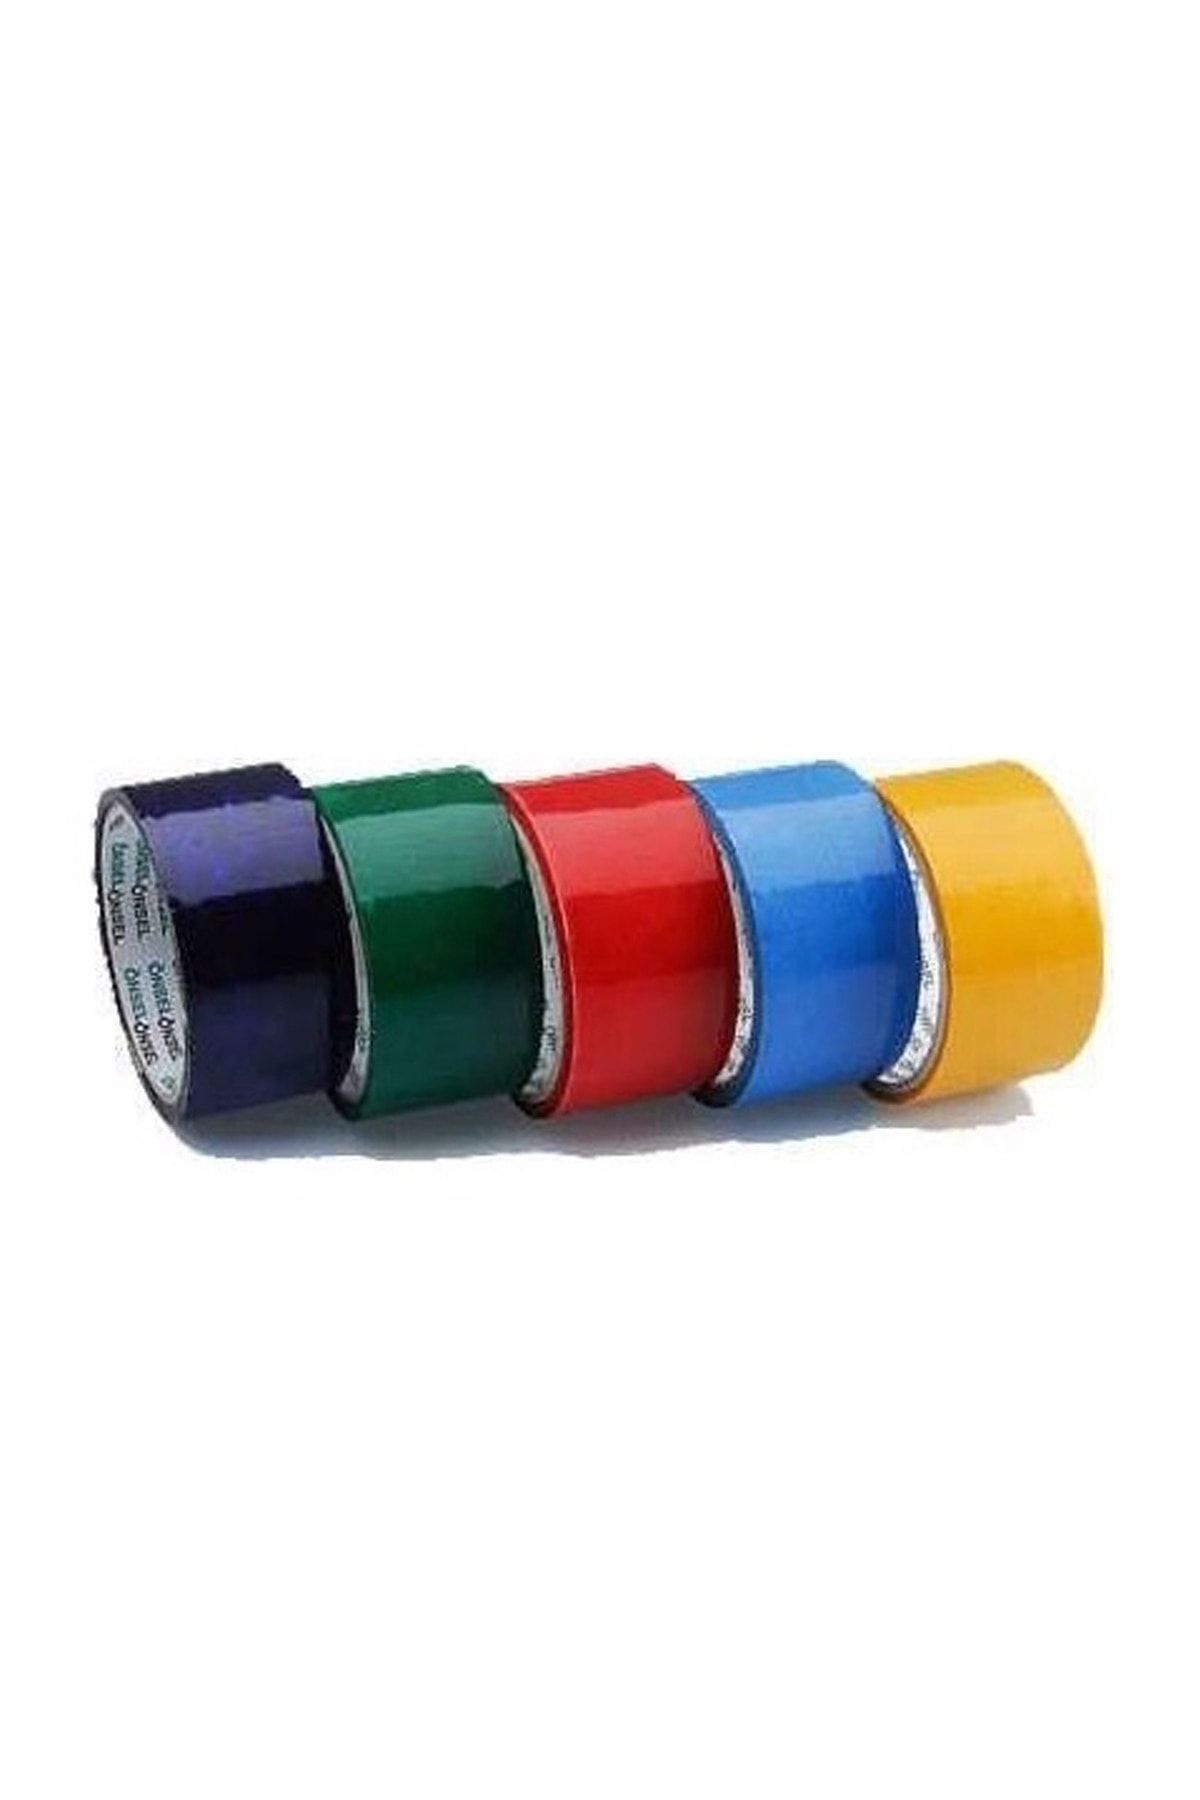 Şahin Ambalaj Renkli Akrilik Koli Bandı 45x100 Kırmızı- Sarı-turuncu-taba-yeşil-siyah Renk Bant